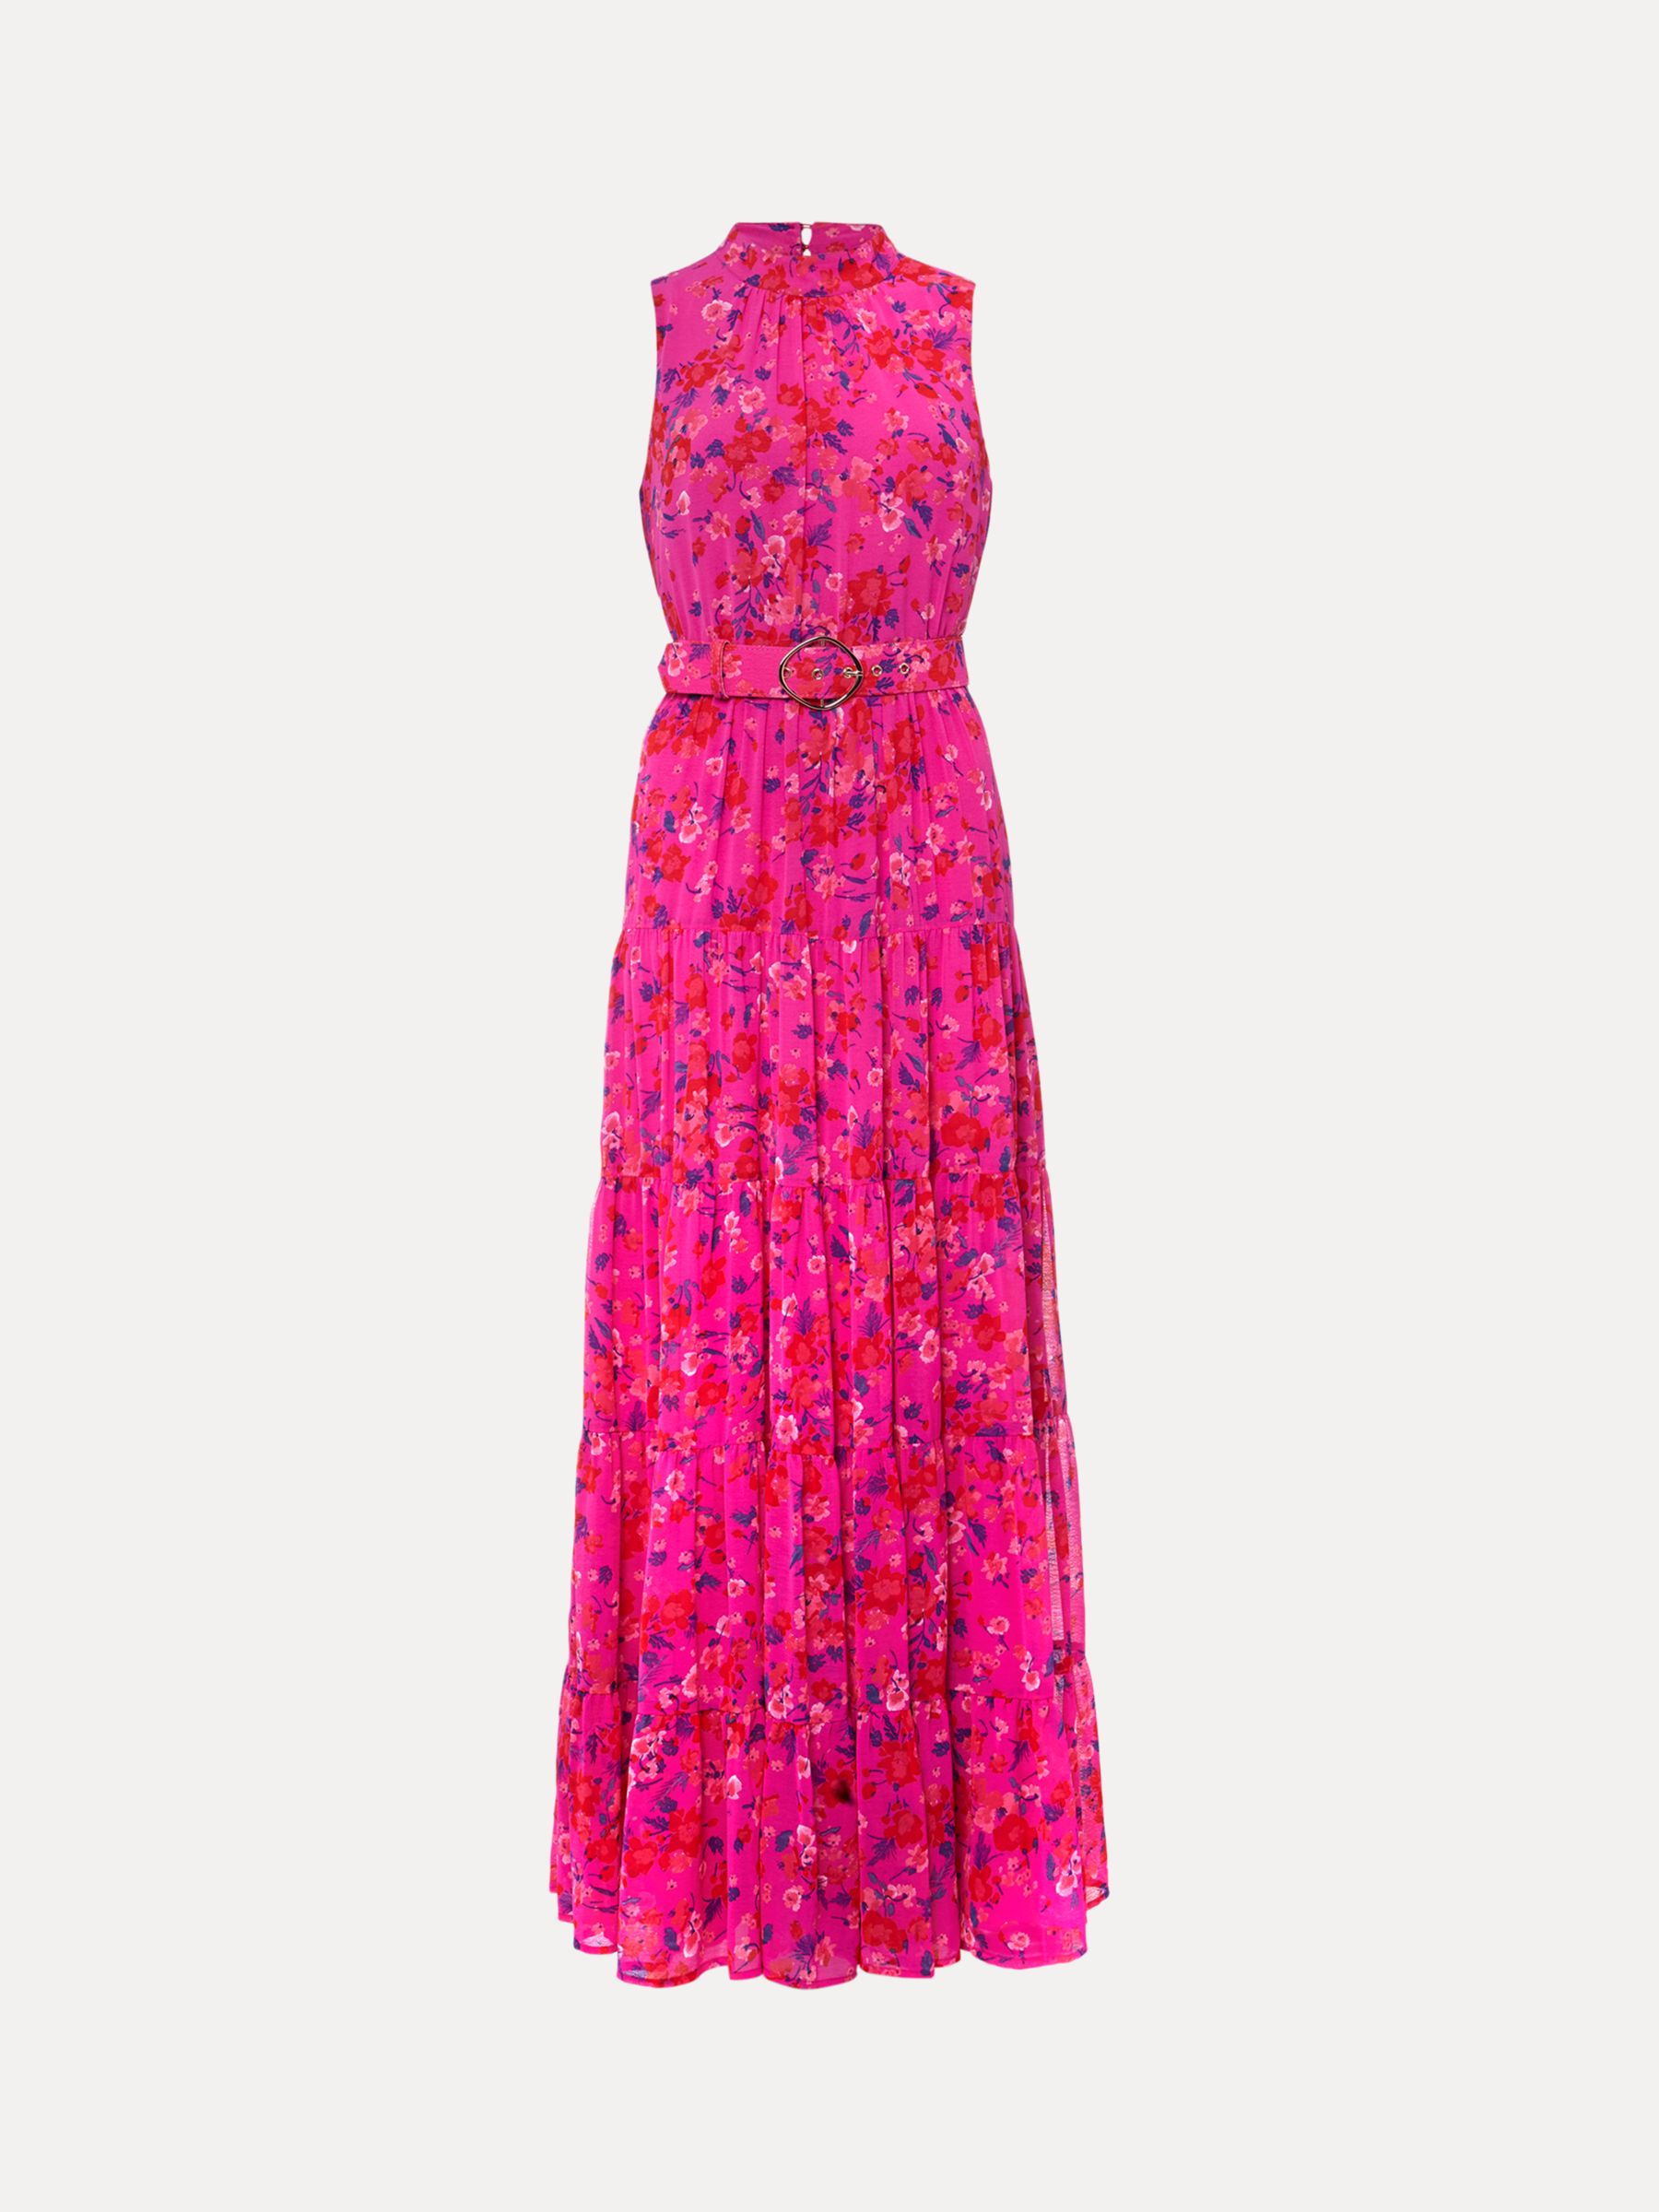 Phase Eight Kara Floral Maxi Dress, Neon Pink, 20